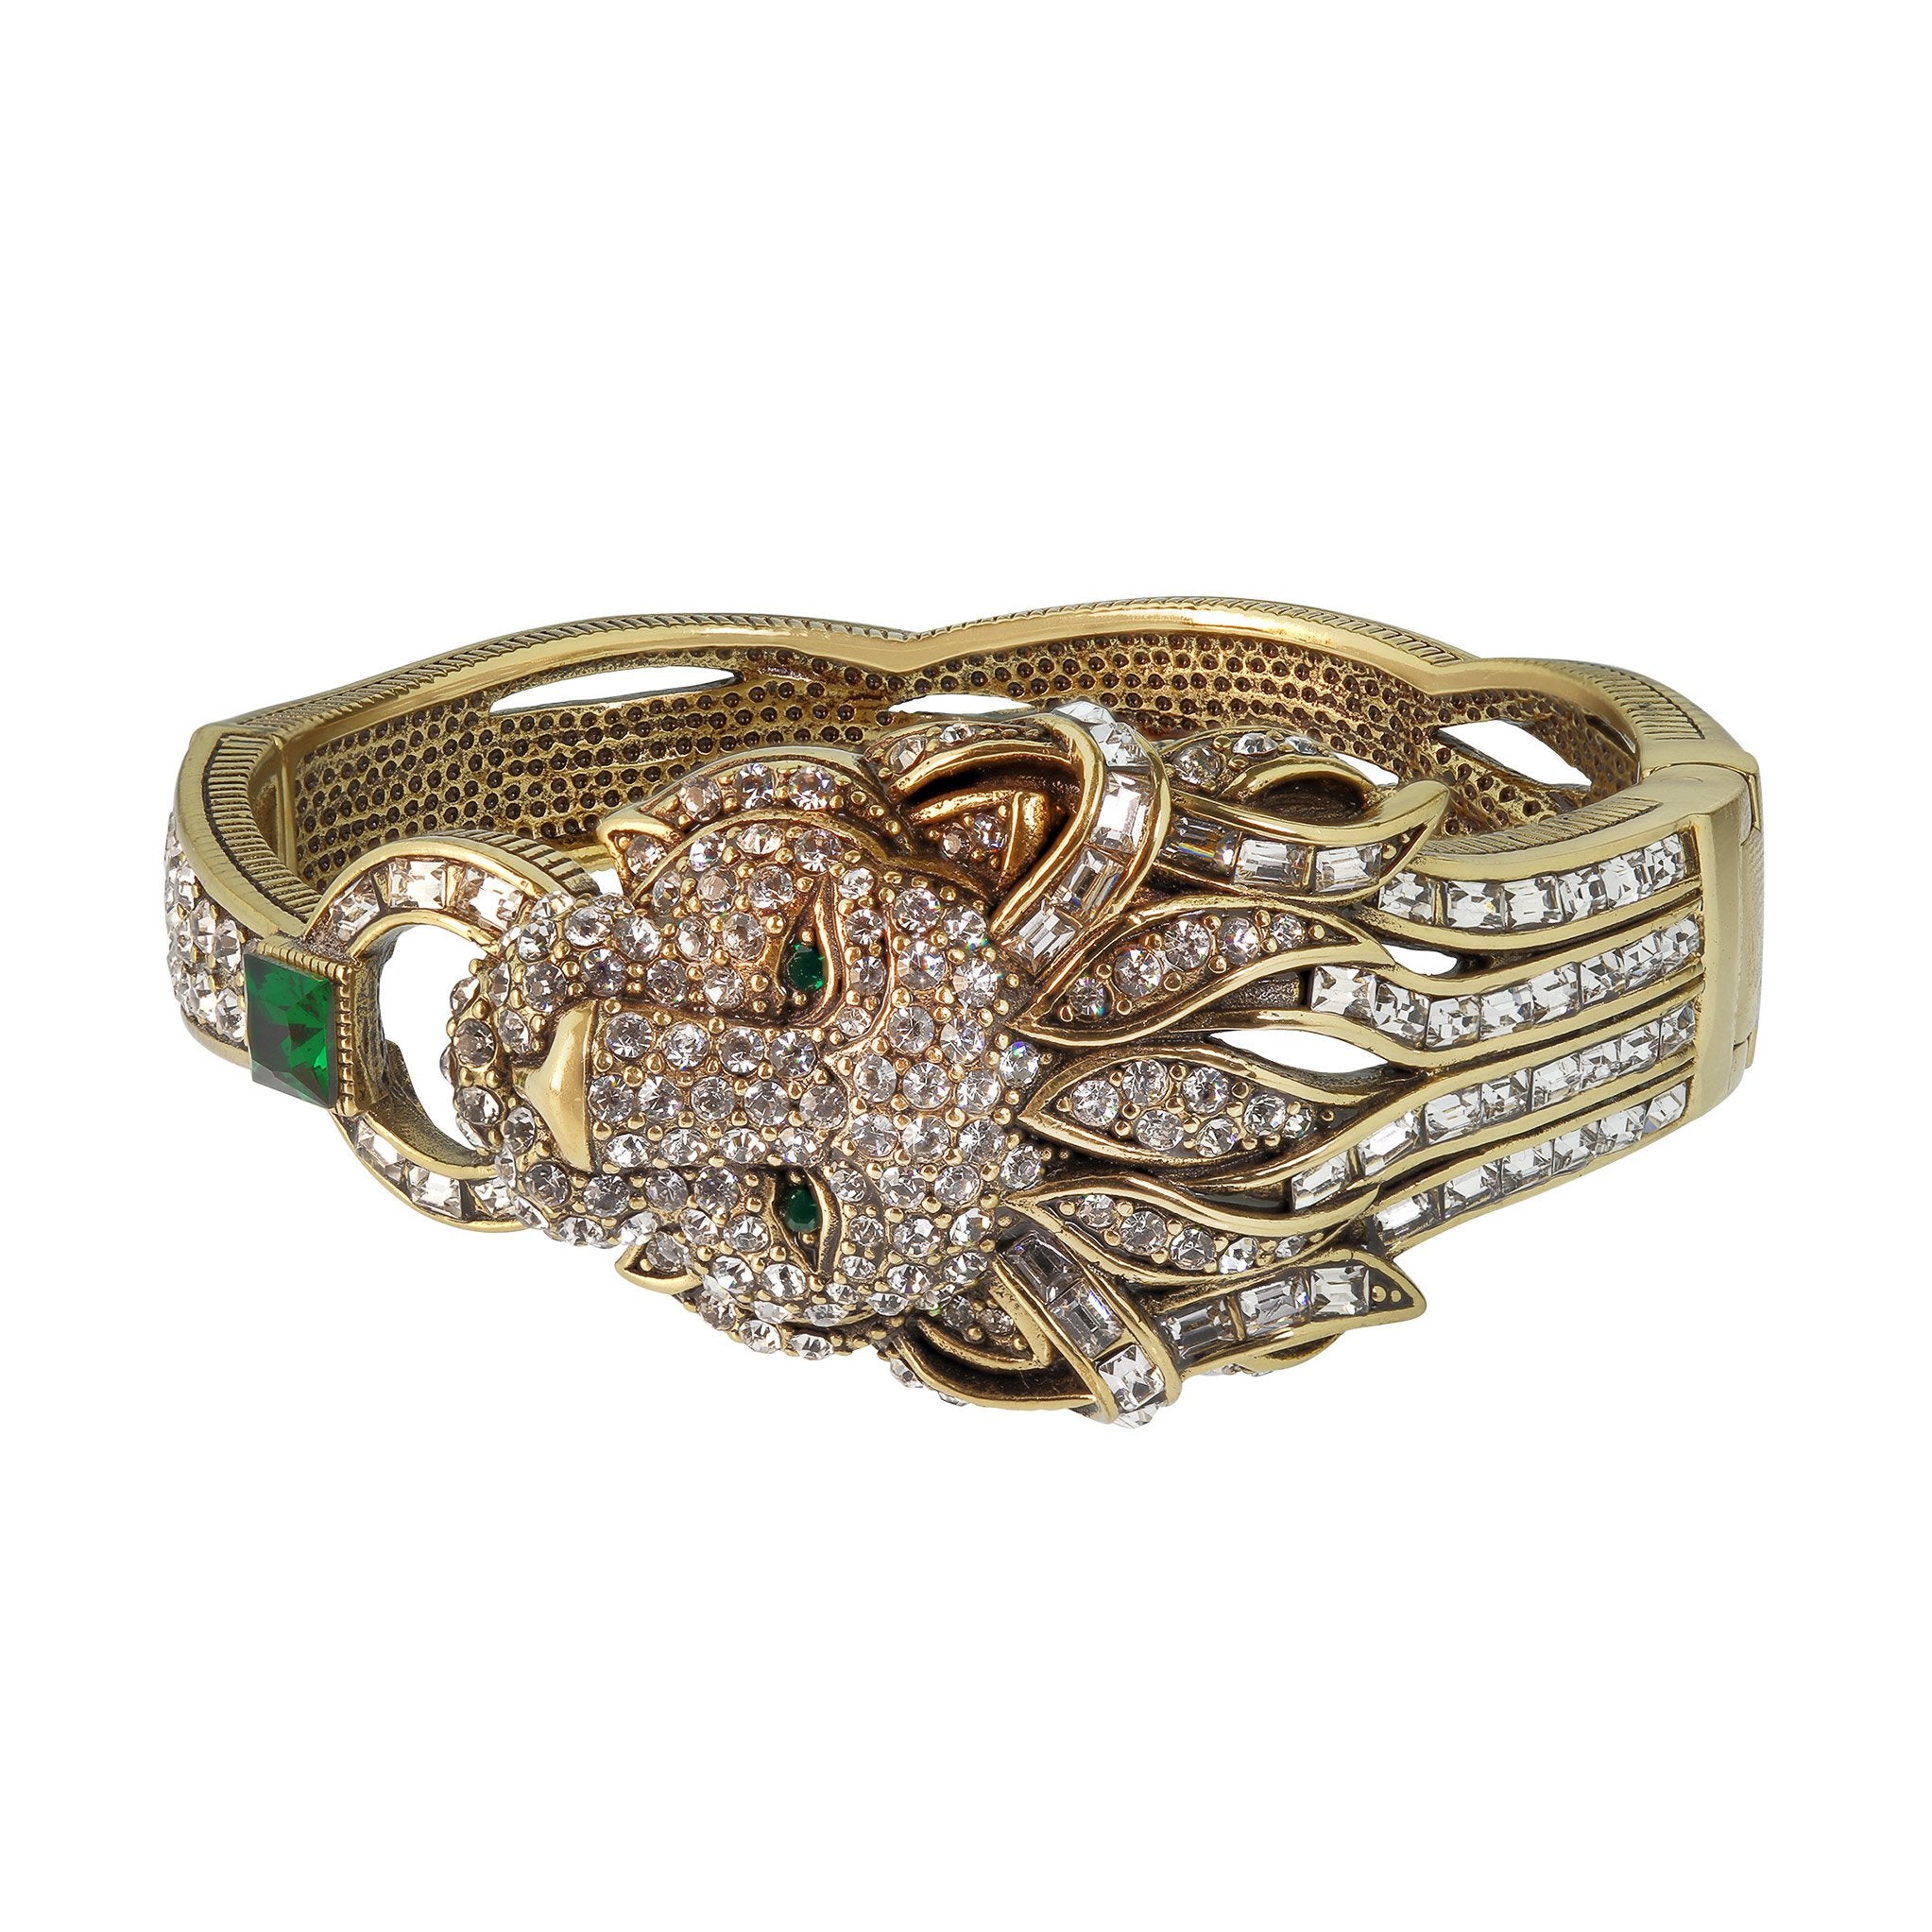 HEIDI DAUS "Me Wow" Beaded Crystal Lion Bracelet